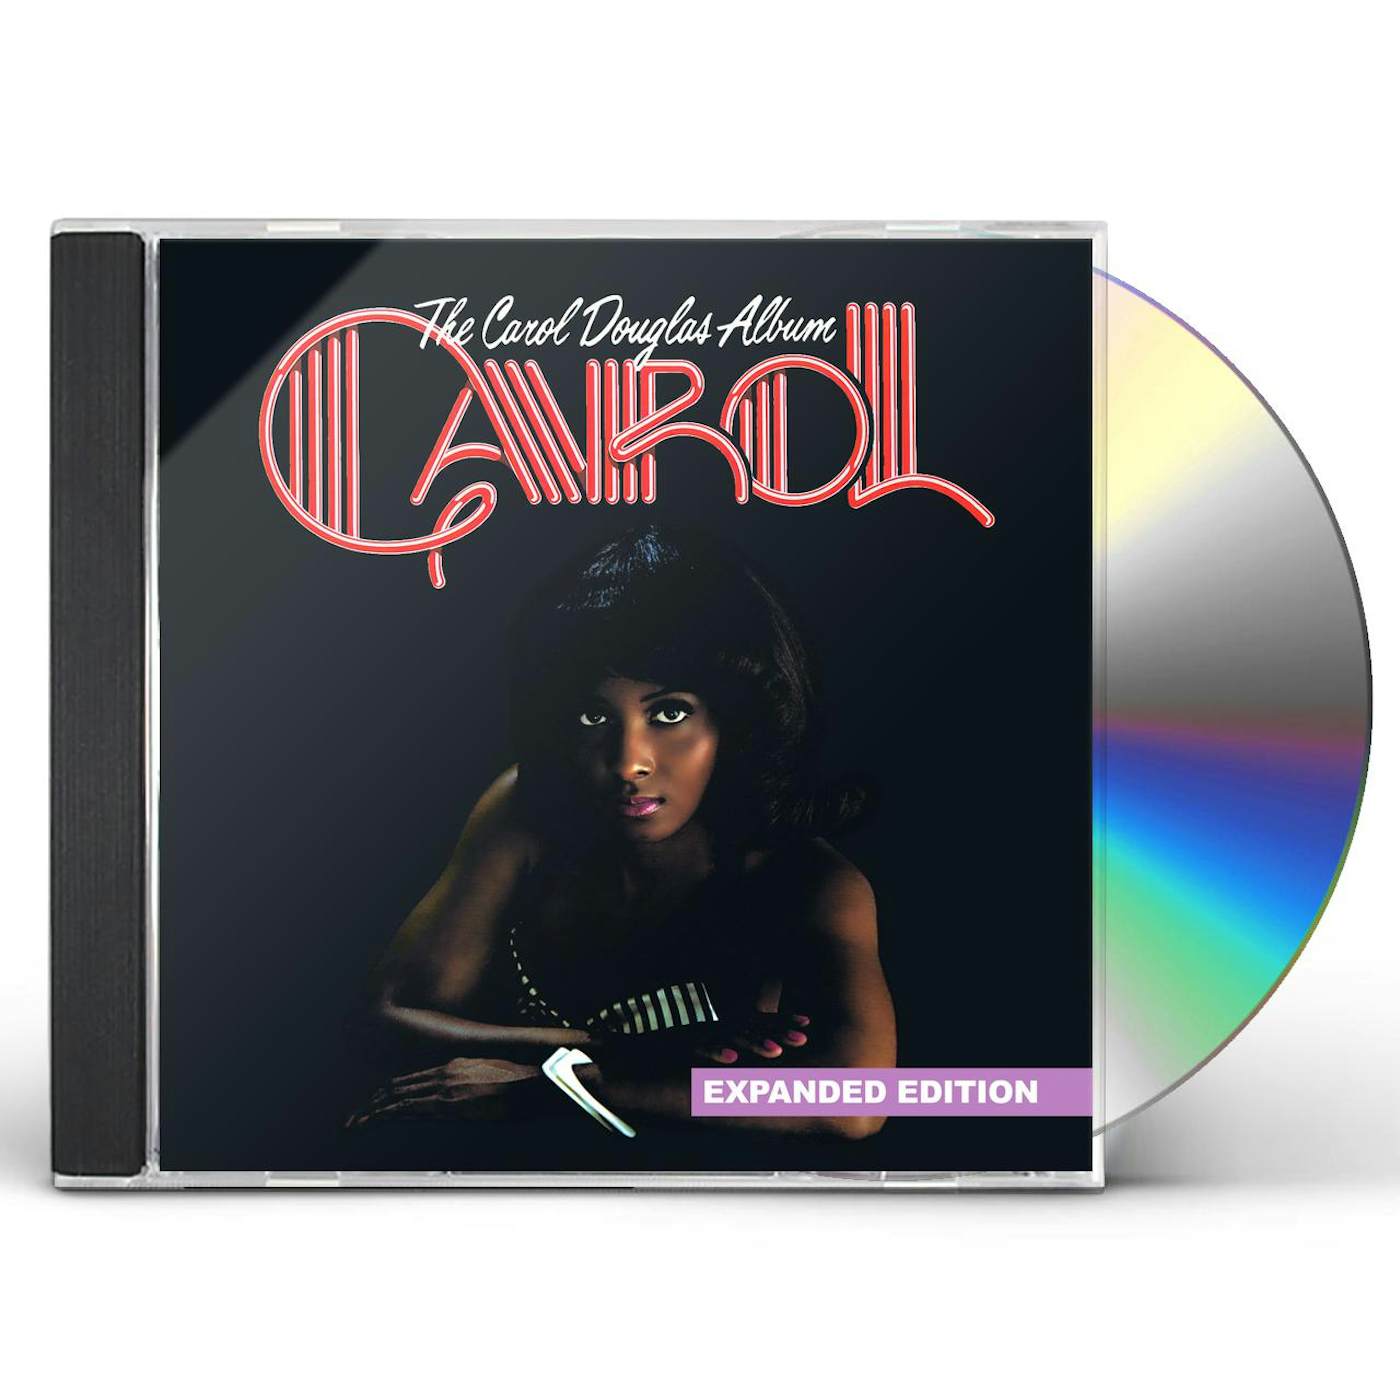 THE CAROL DOUGLAS ALBUM CD